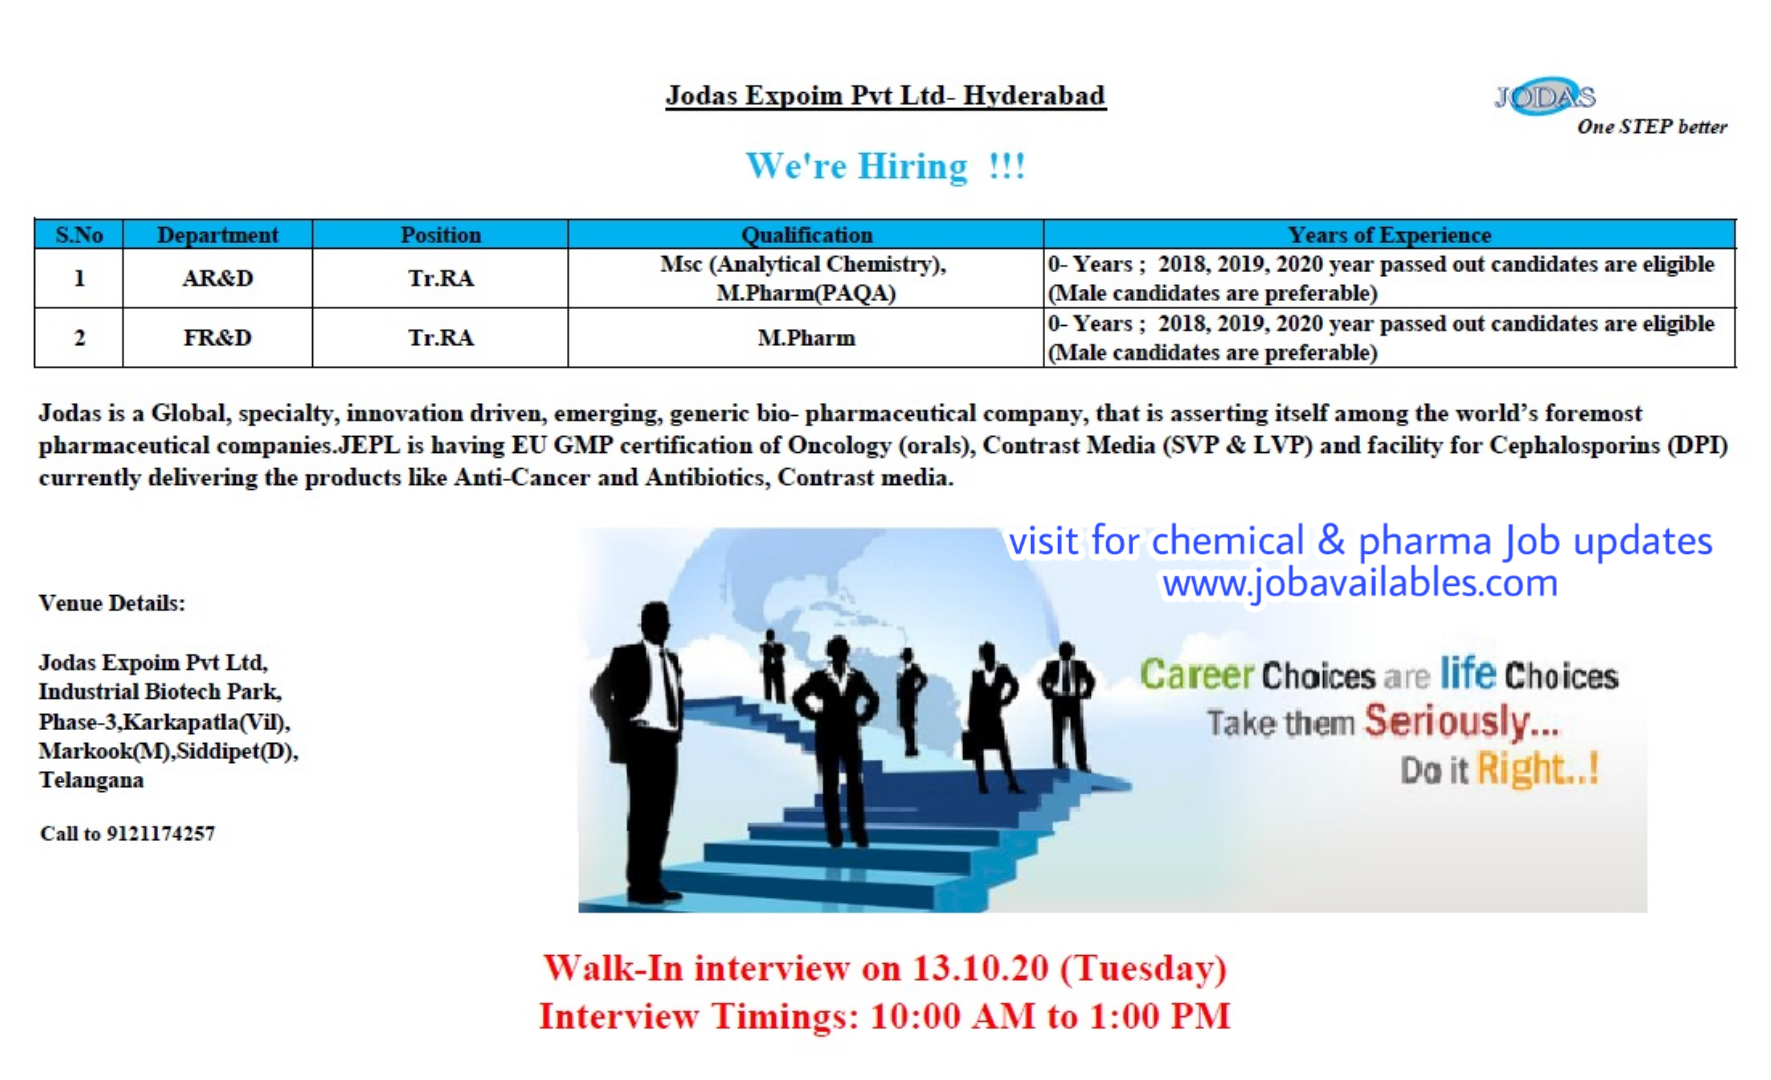 Job Availables, Jodas Expoim Pvt. Ltd Walk-In Drive for Fresher MSc Analytical Chemistry/ M.Pharm - AR&D/ FR&D